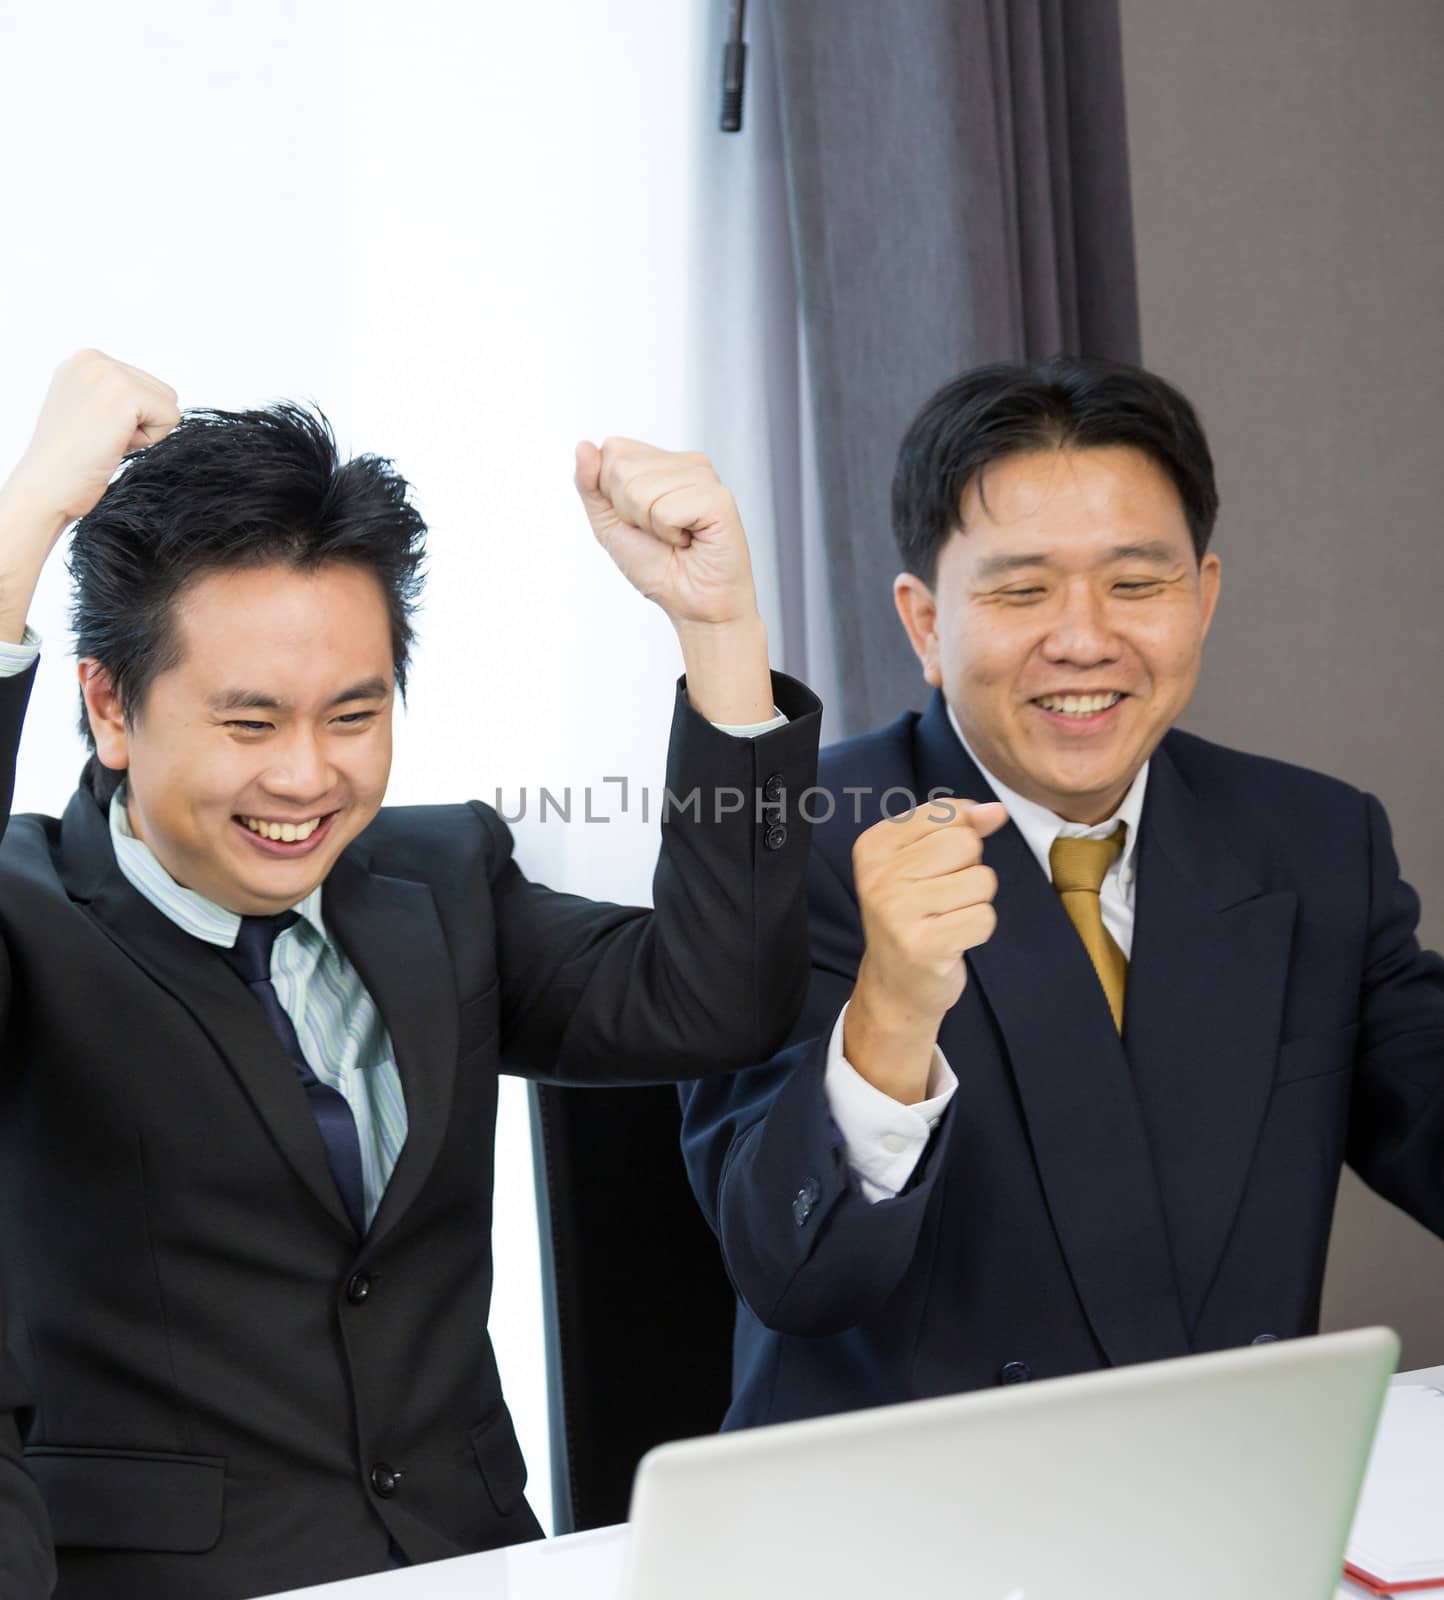 Businessmen celebrate their business success